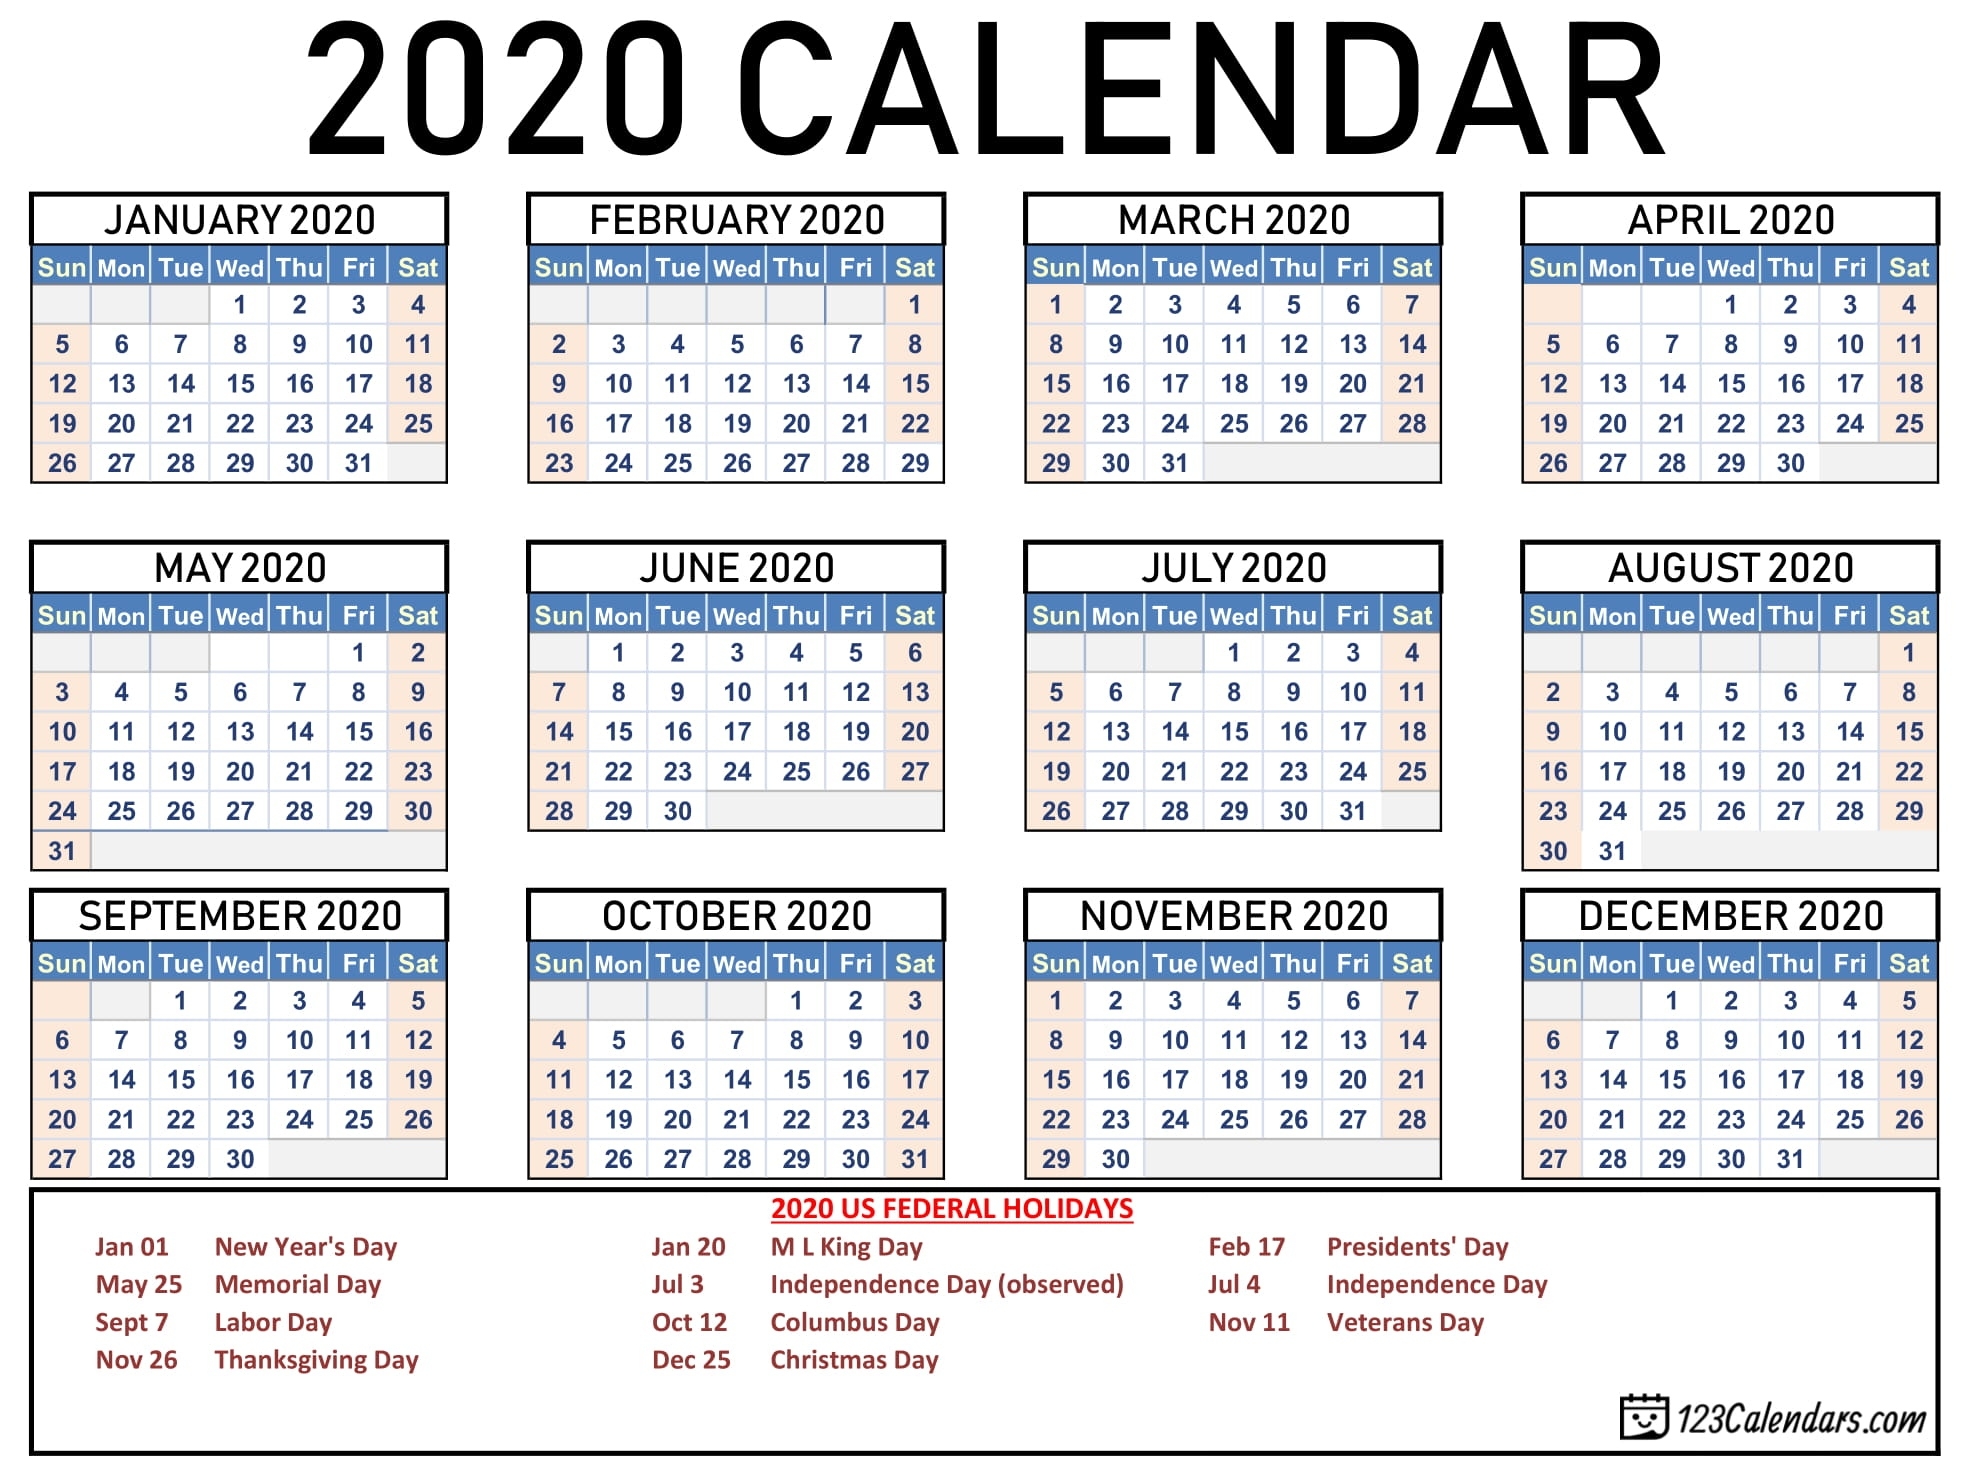 Free Printable Calendar | 123Calendars 2020 Calendar Showing Federal Holidays